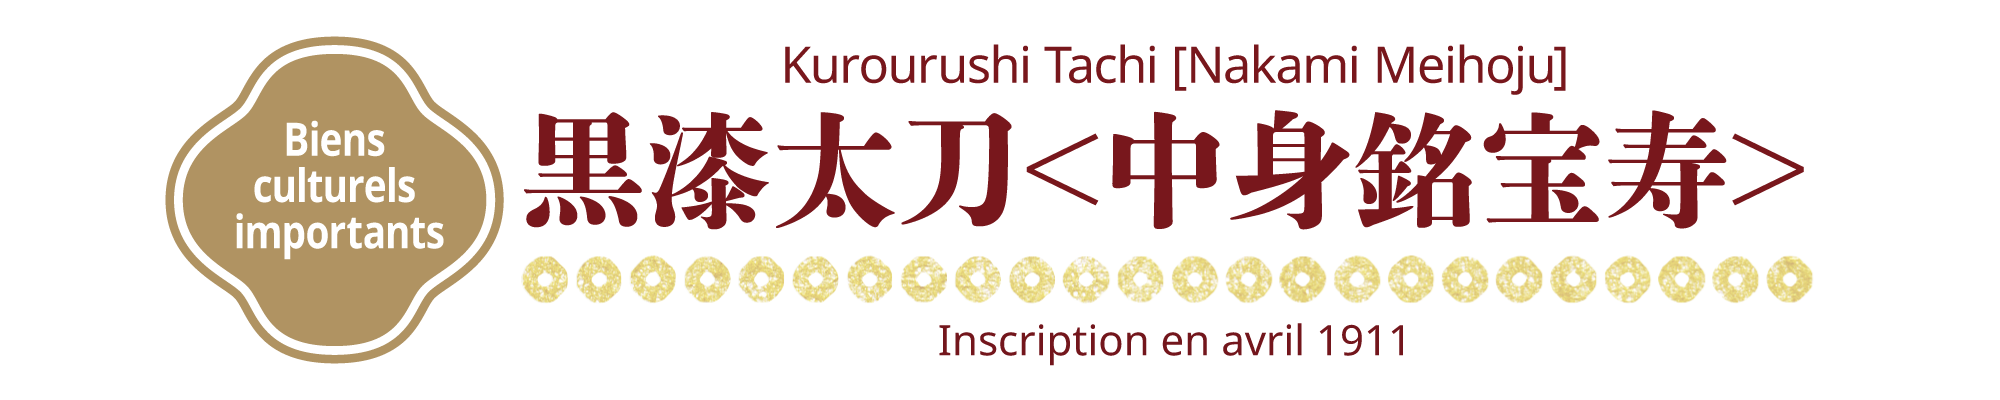 [Biens culturels importants]Kurourushi Tachi [Nakami Meihoju], Inscription en avril 1911